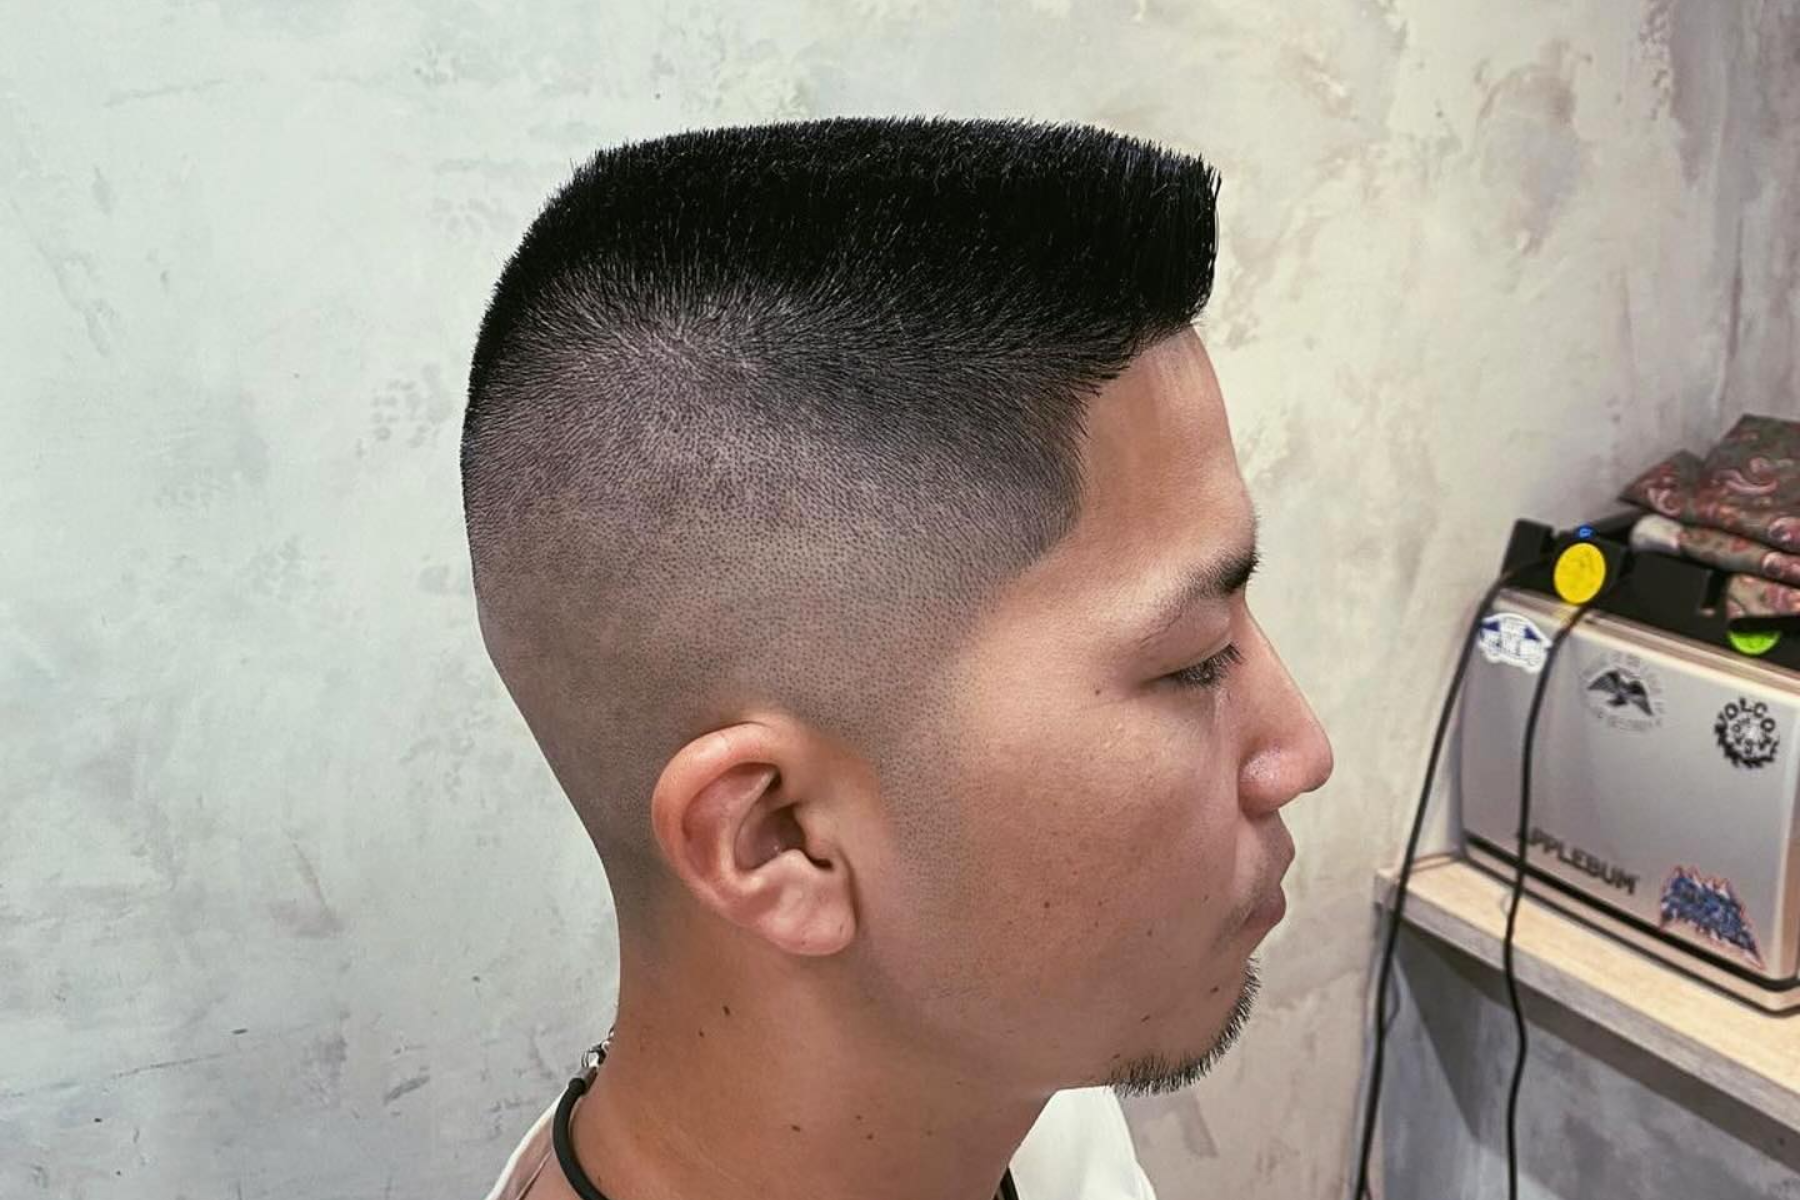 An Asian man with a flat top haircut